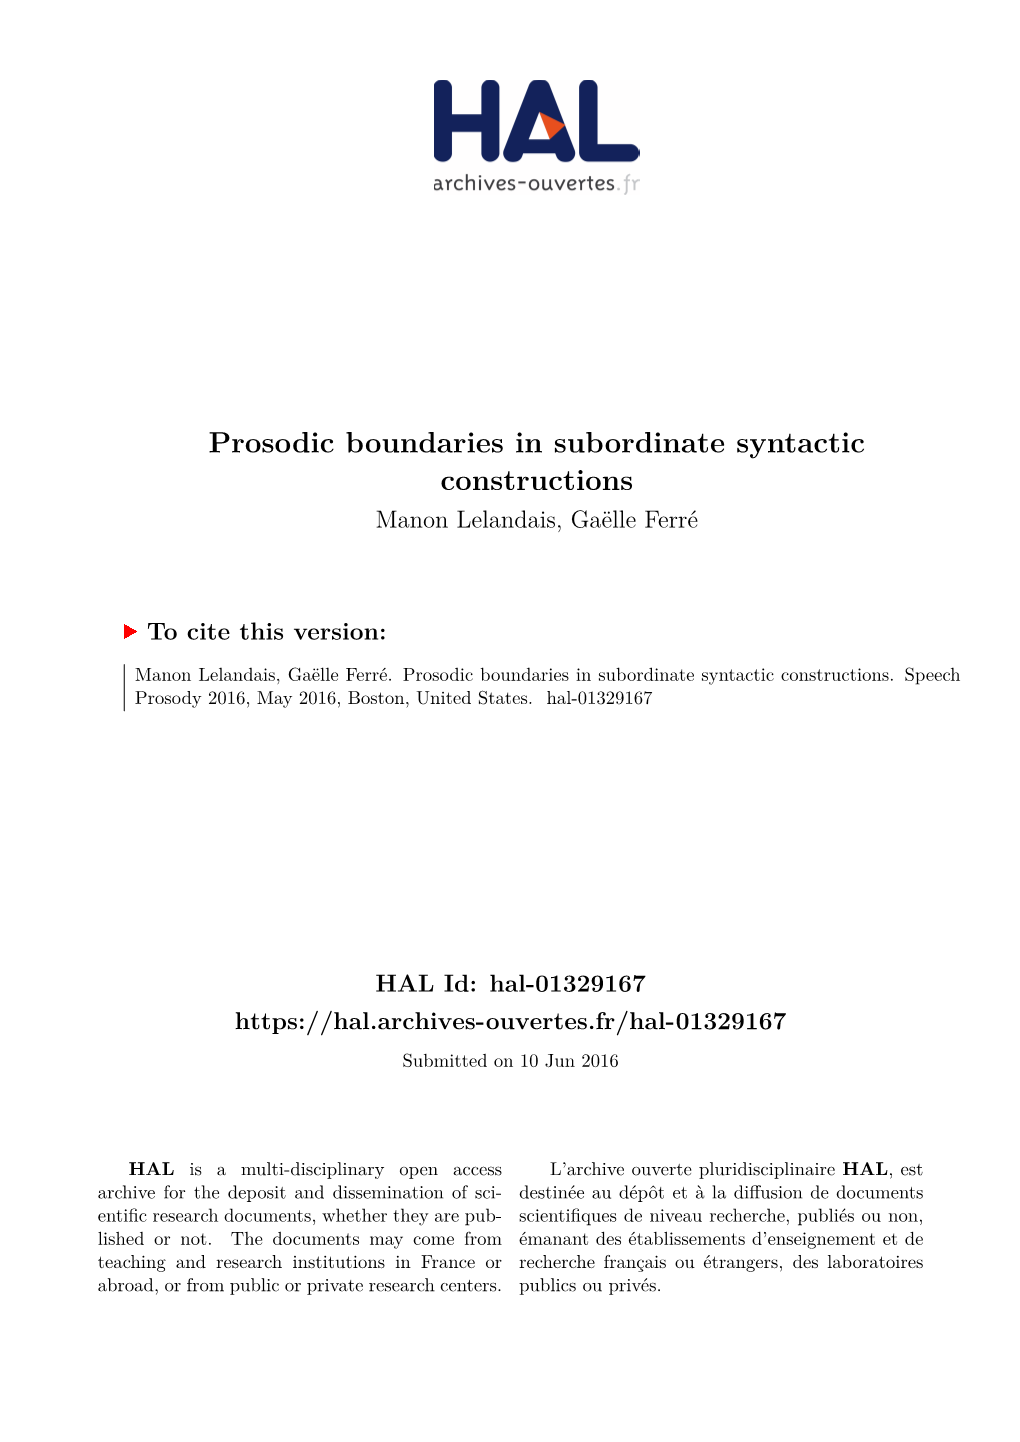 Prosodic Boundaries in Subordinate Syntactic Constructions Manon Lelandais, Gaëlle Ferré